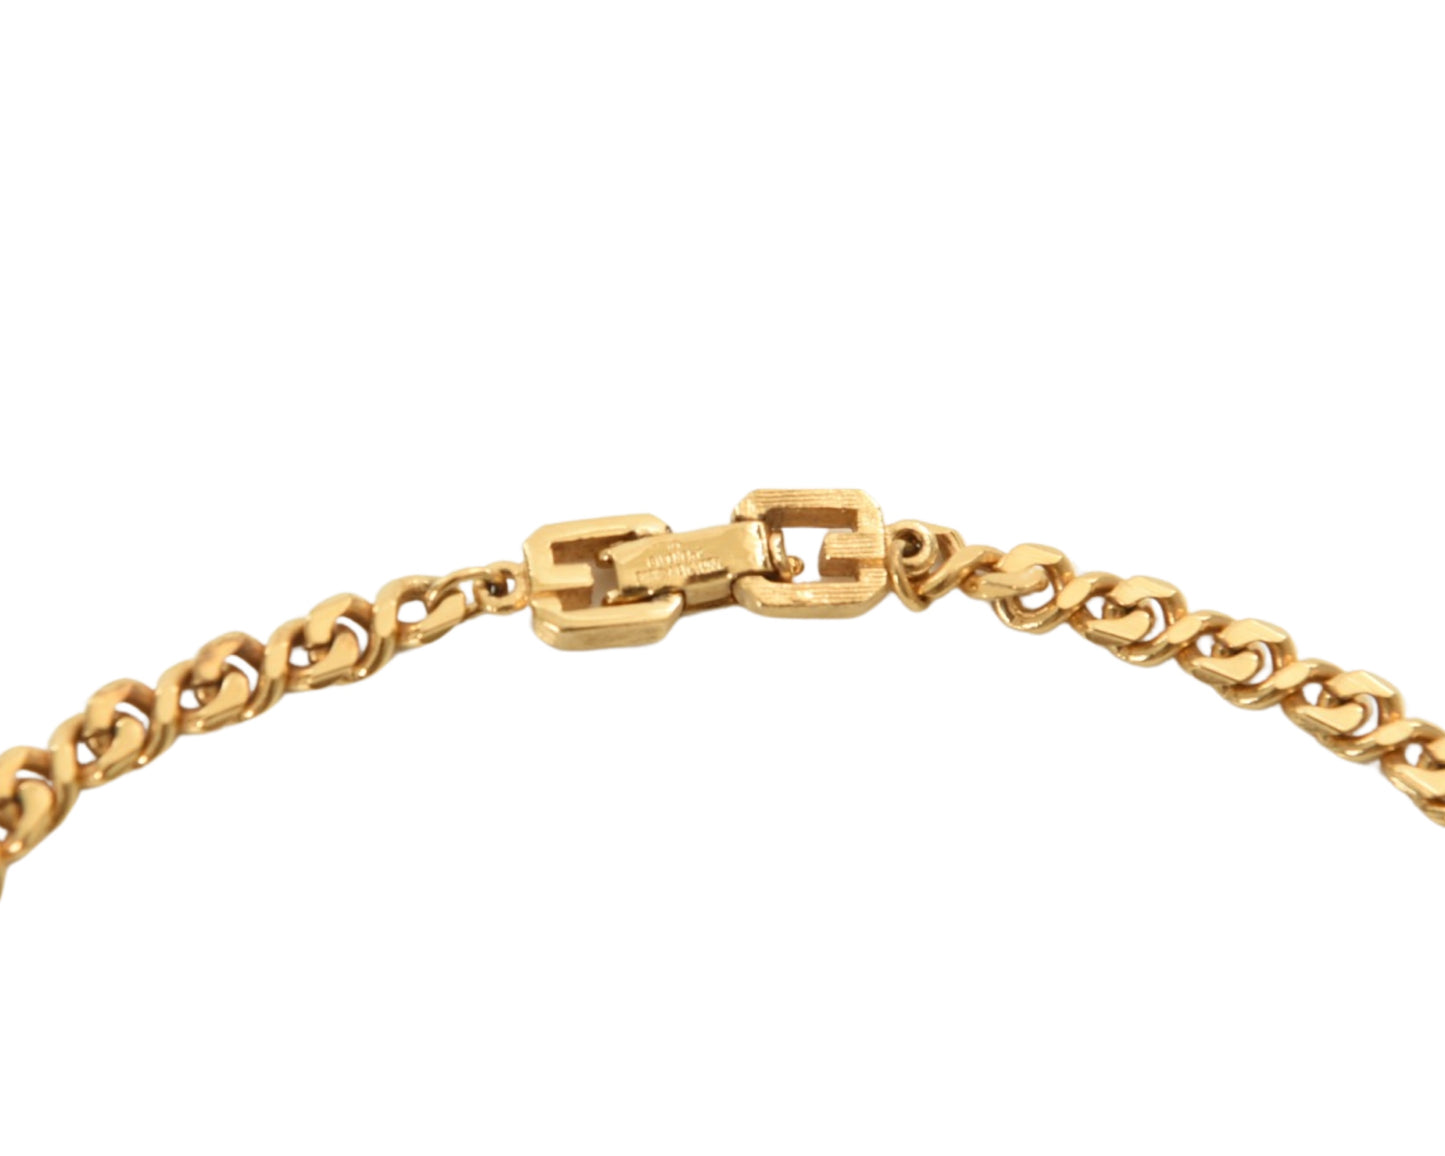 Givenchy Gold Metal Necklace Vintage